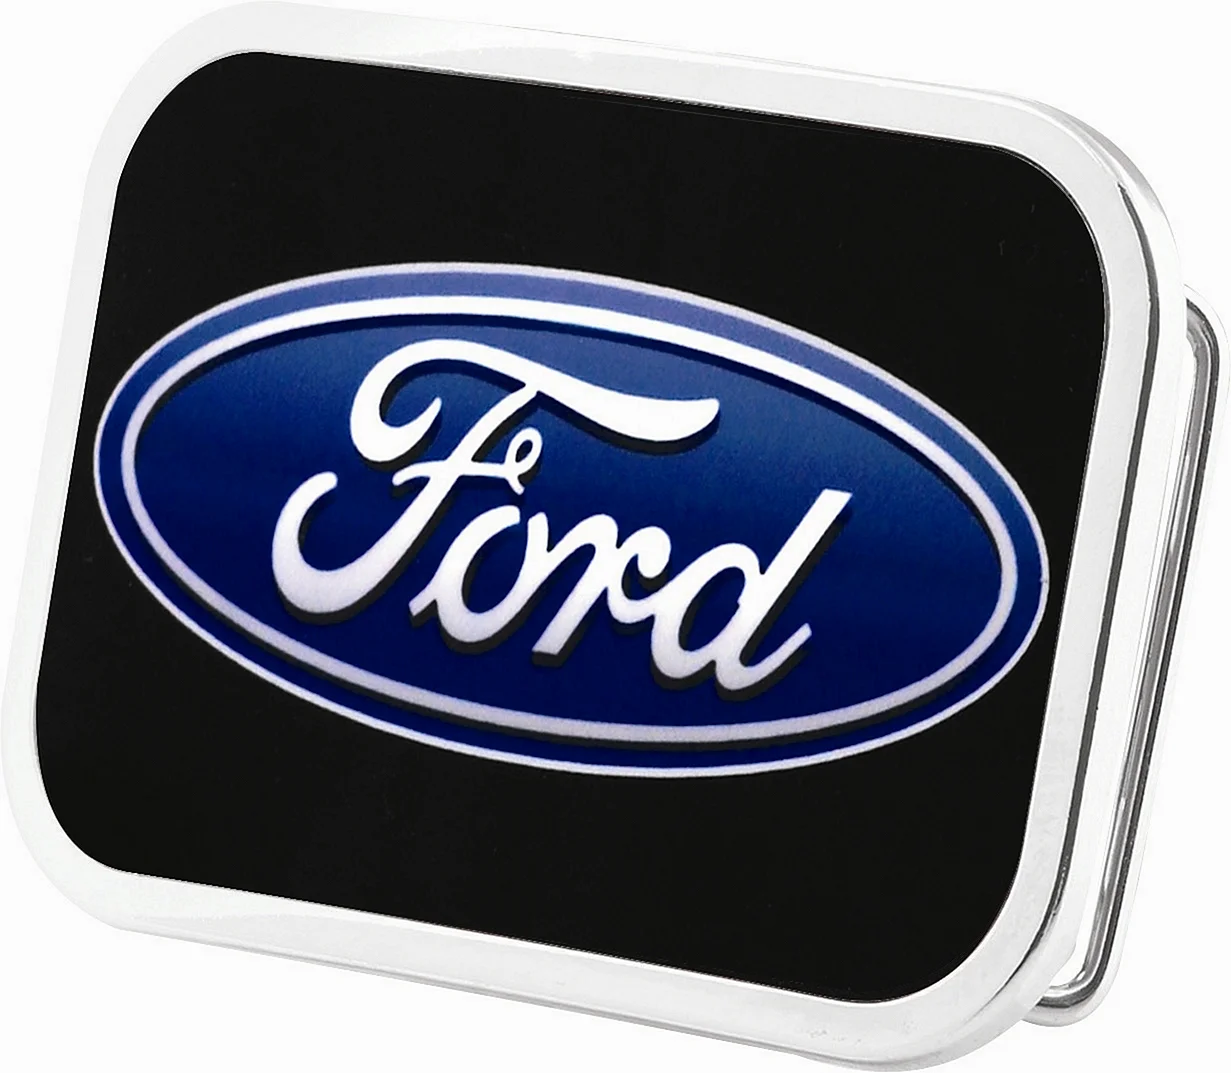 Ford logo 1976